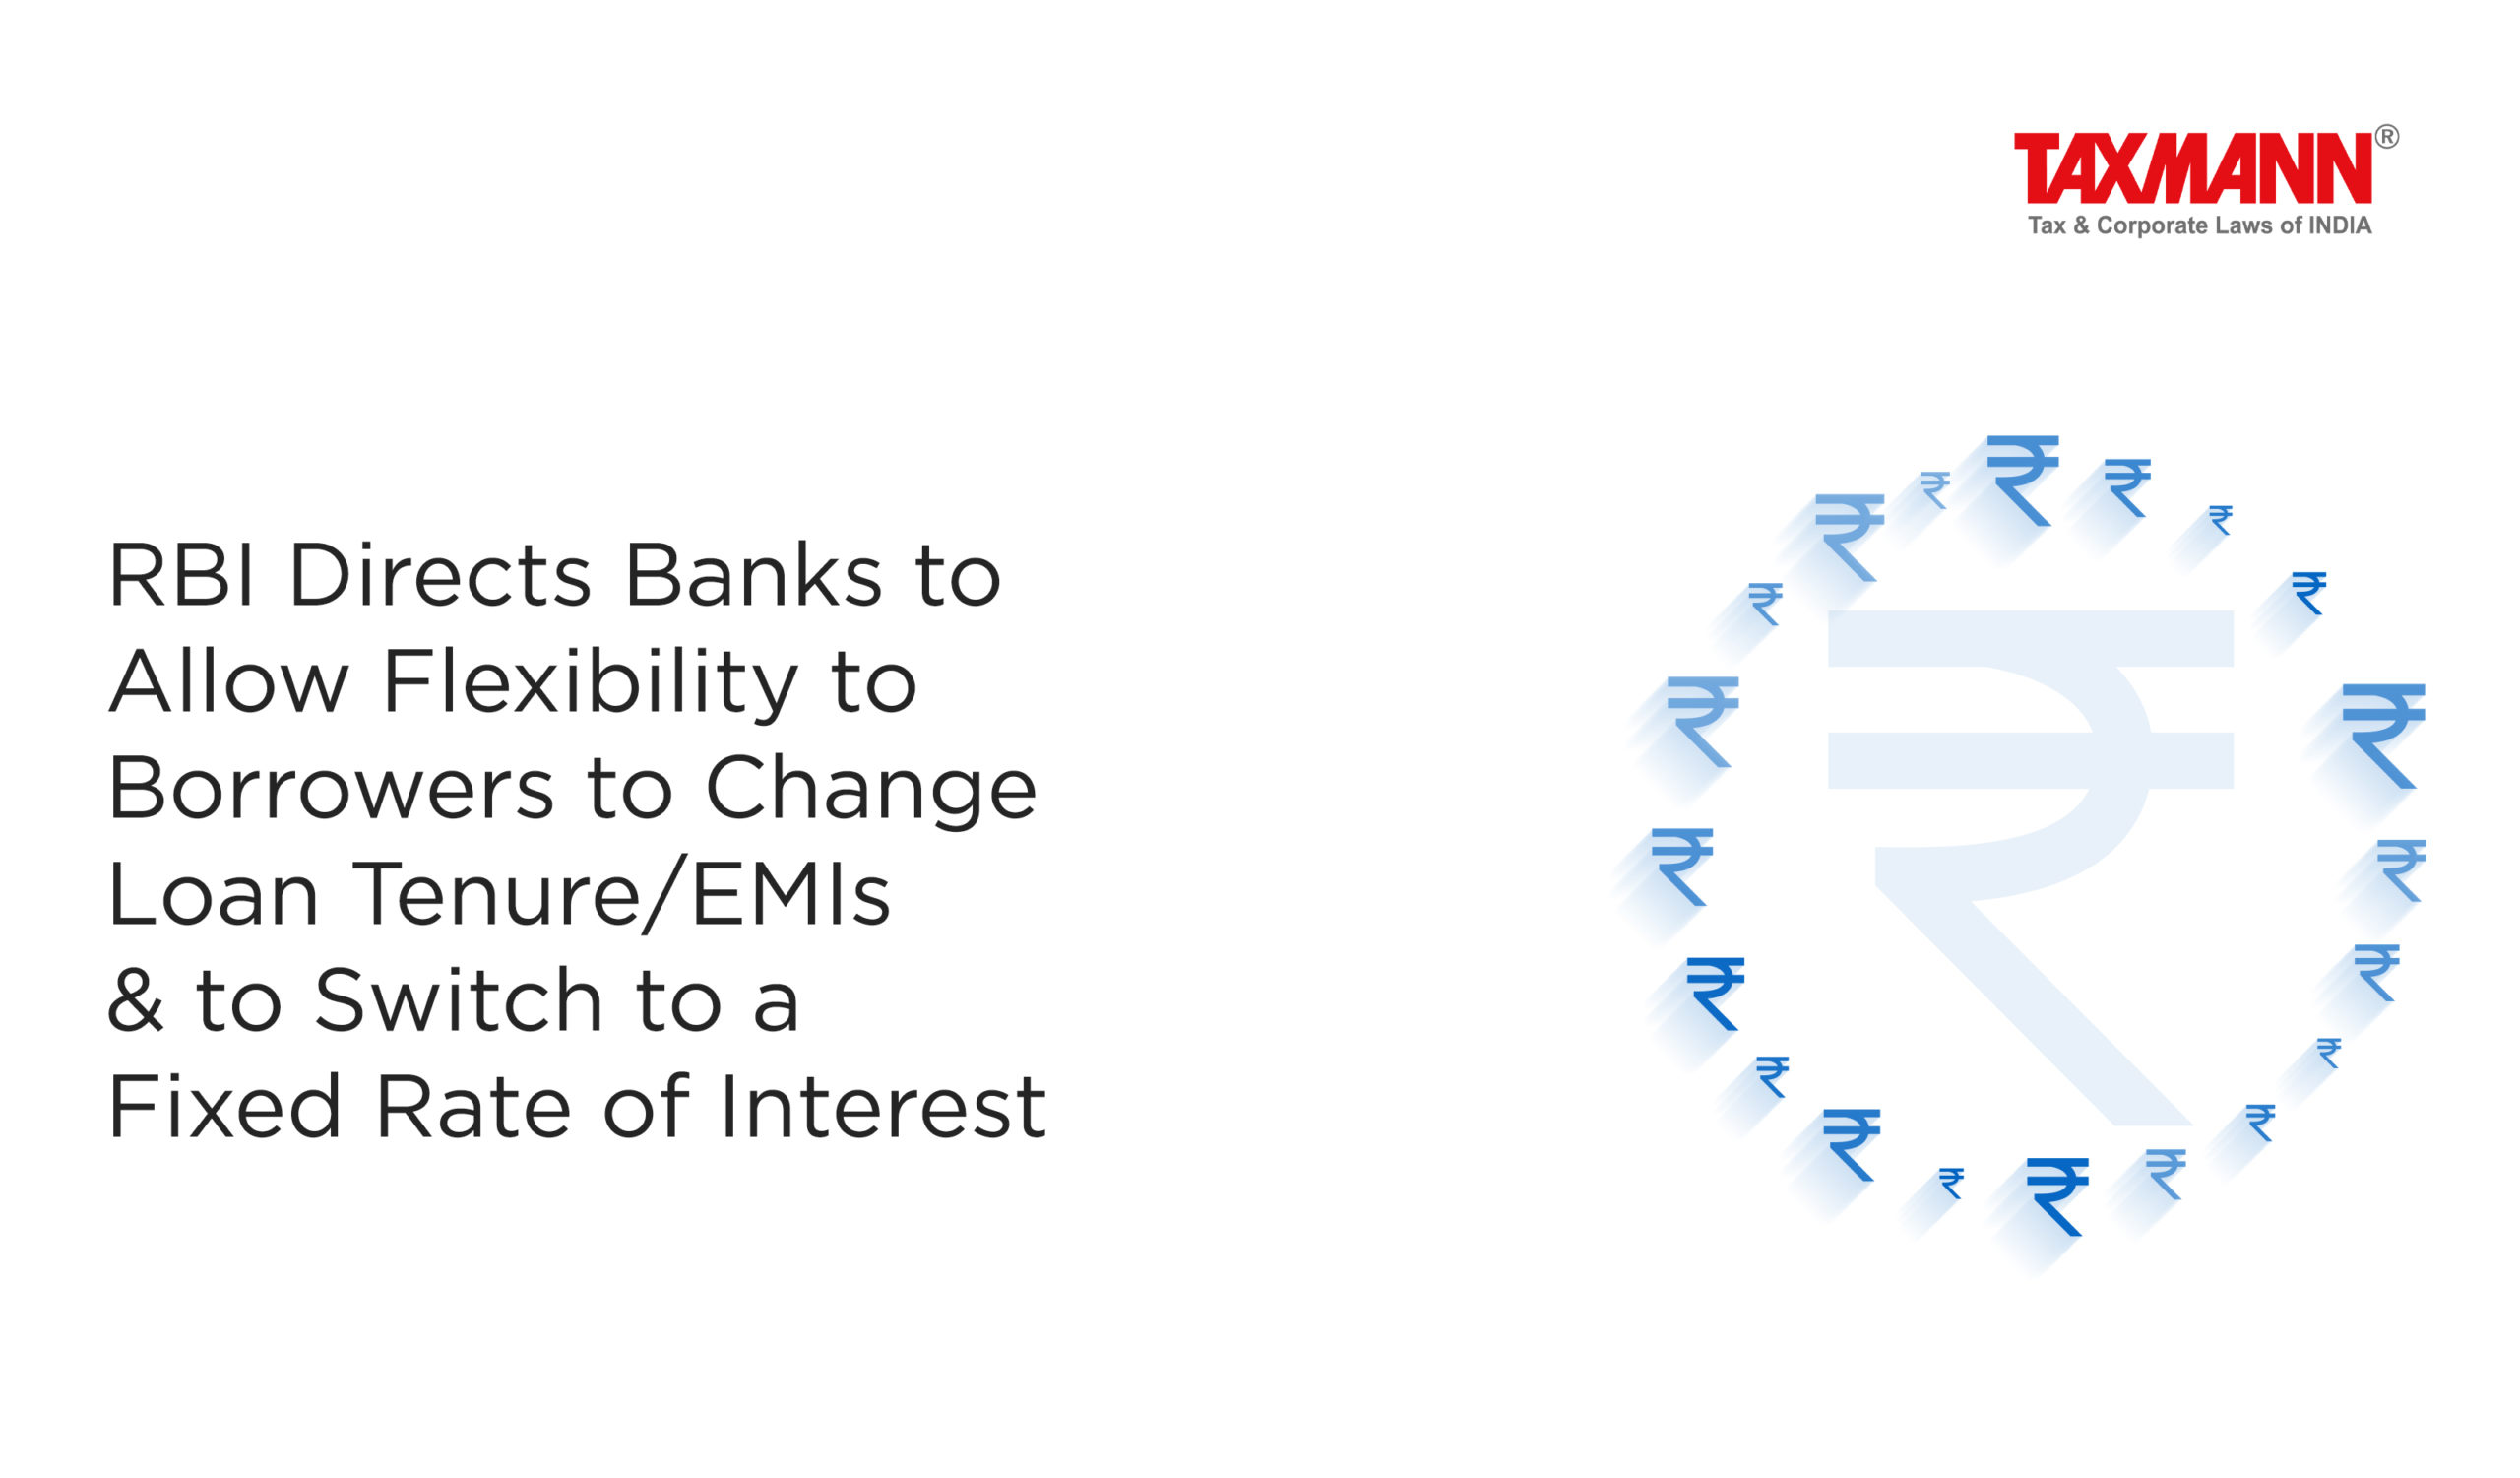 Flexibility to Change Loan Tenure/EMIs